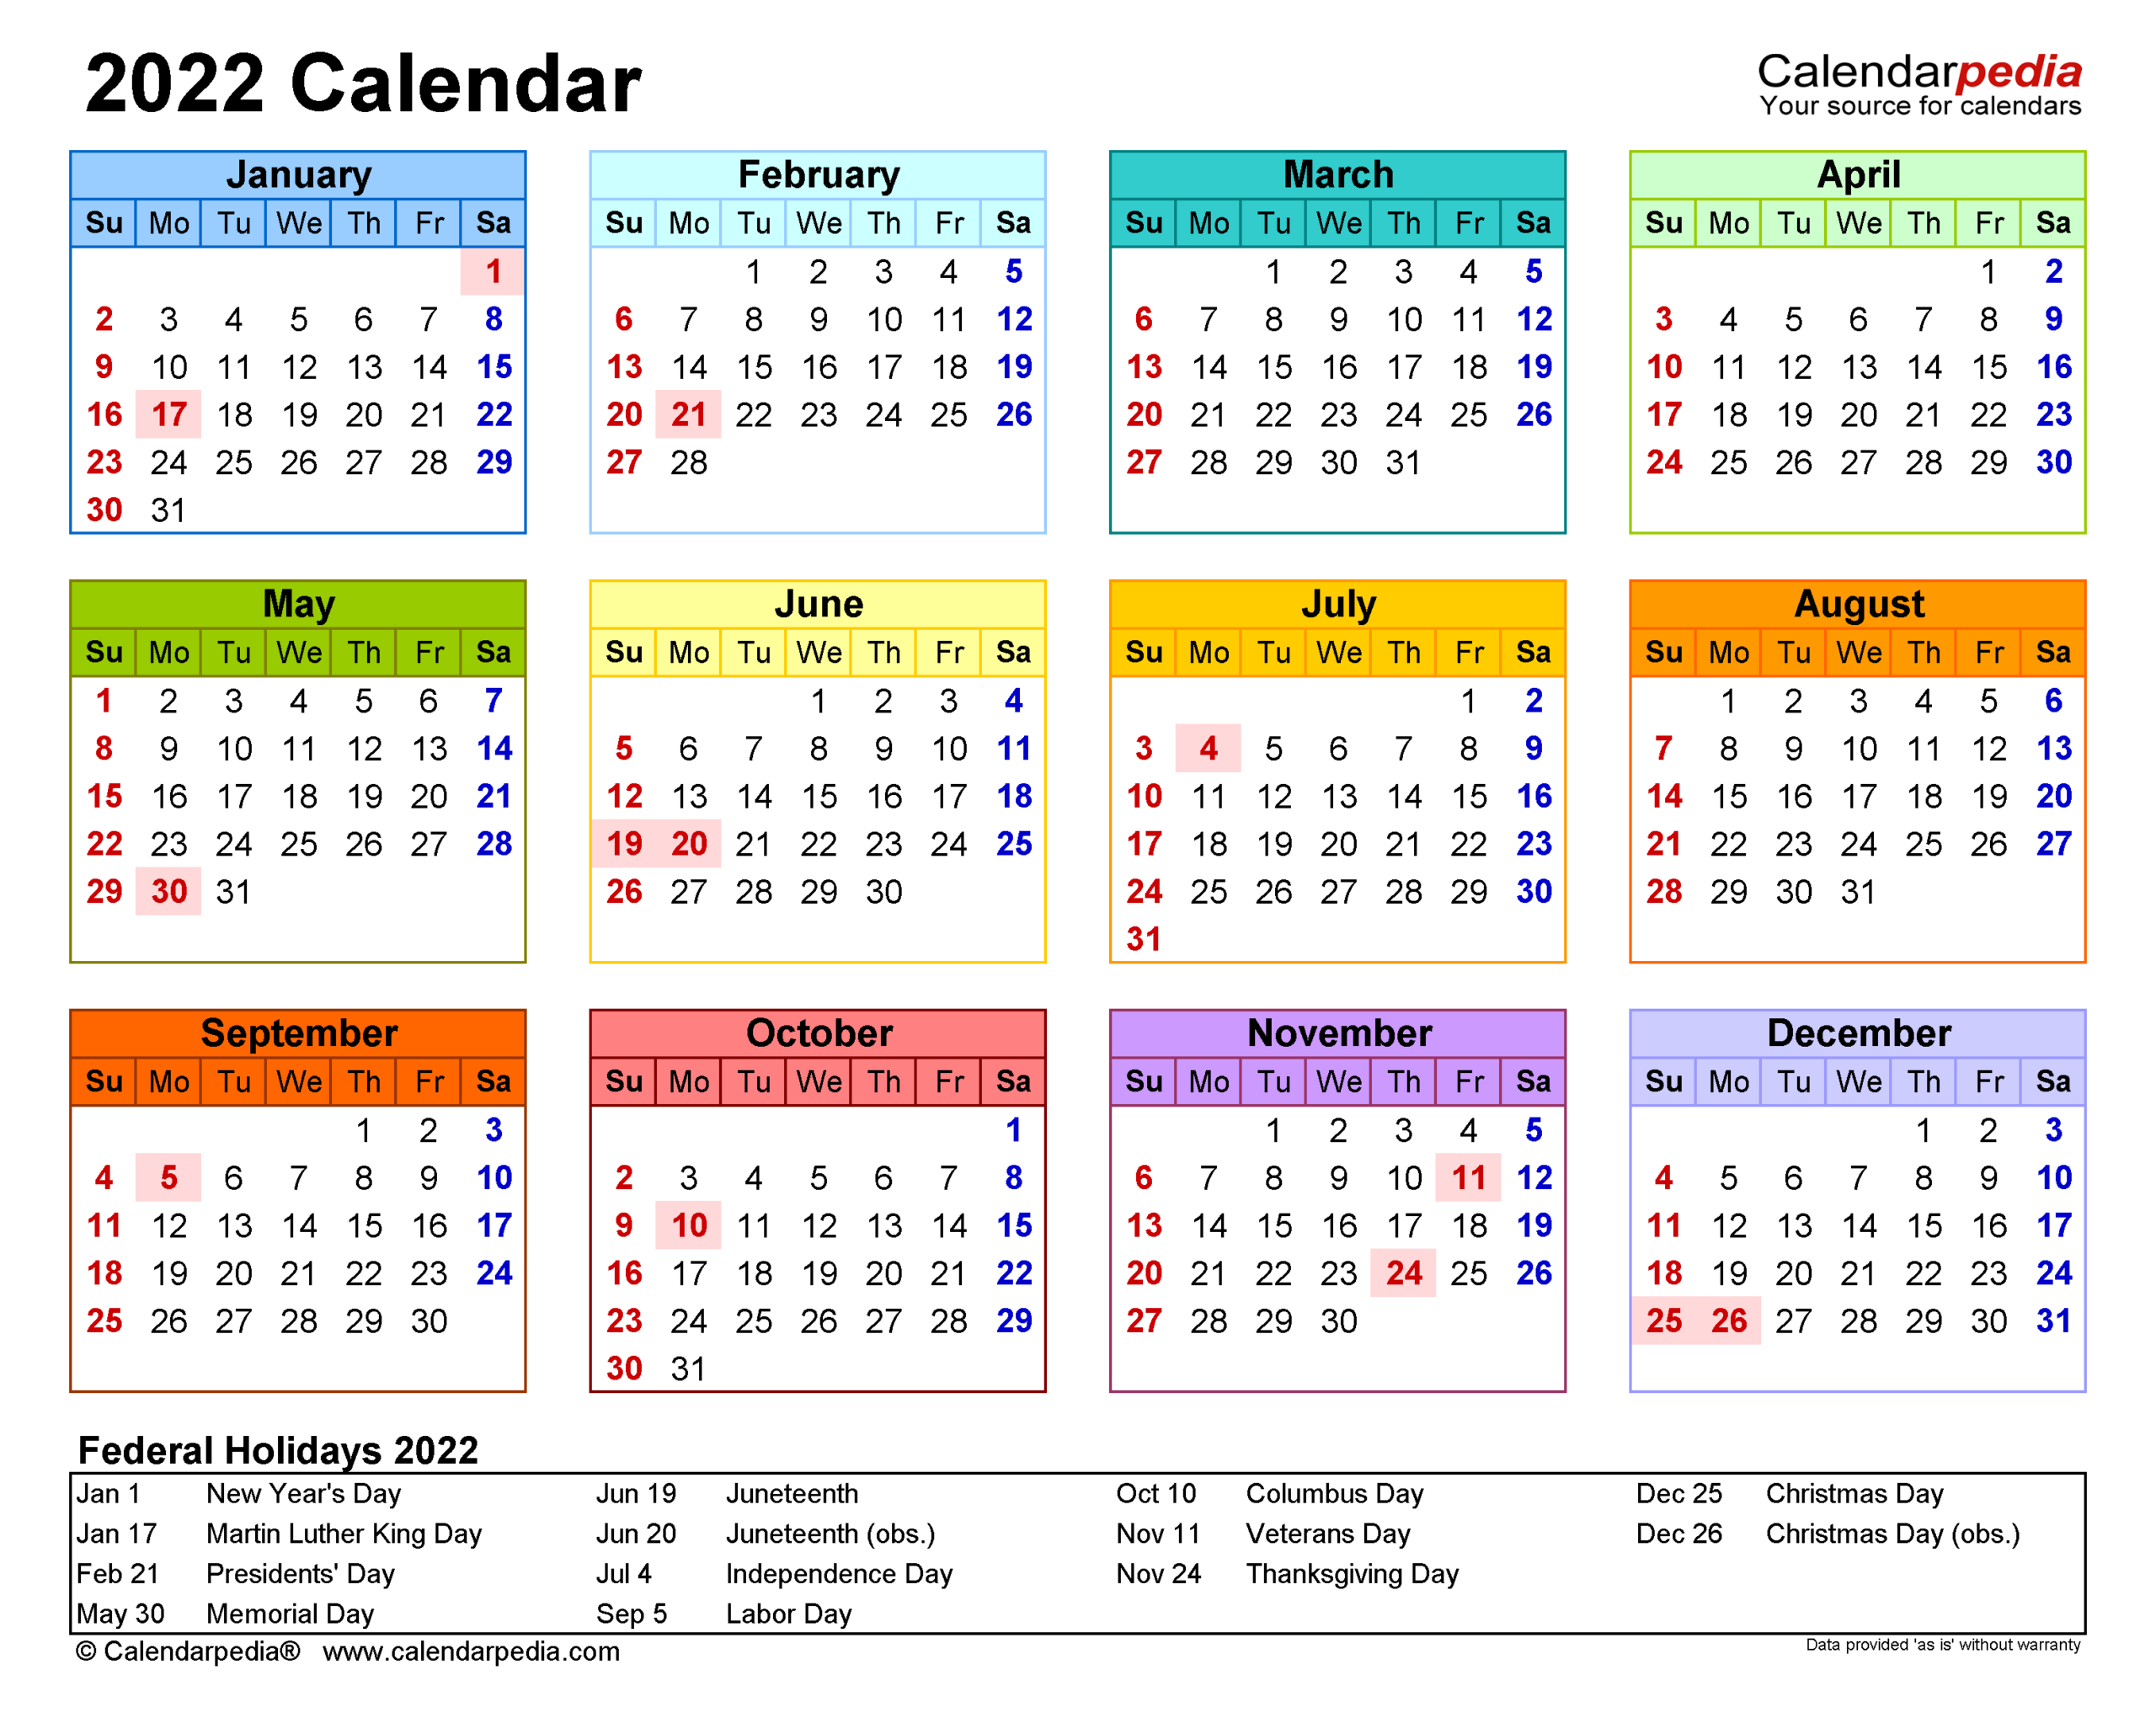 2022 Calendar - Free Printable Excel Templates - Calendarpedia